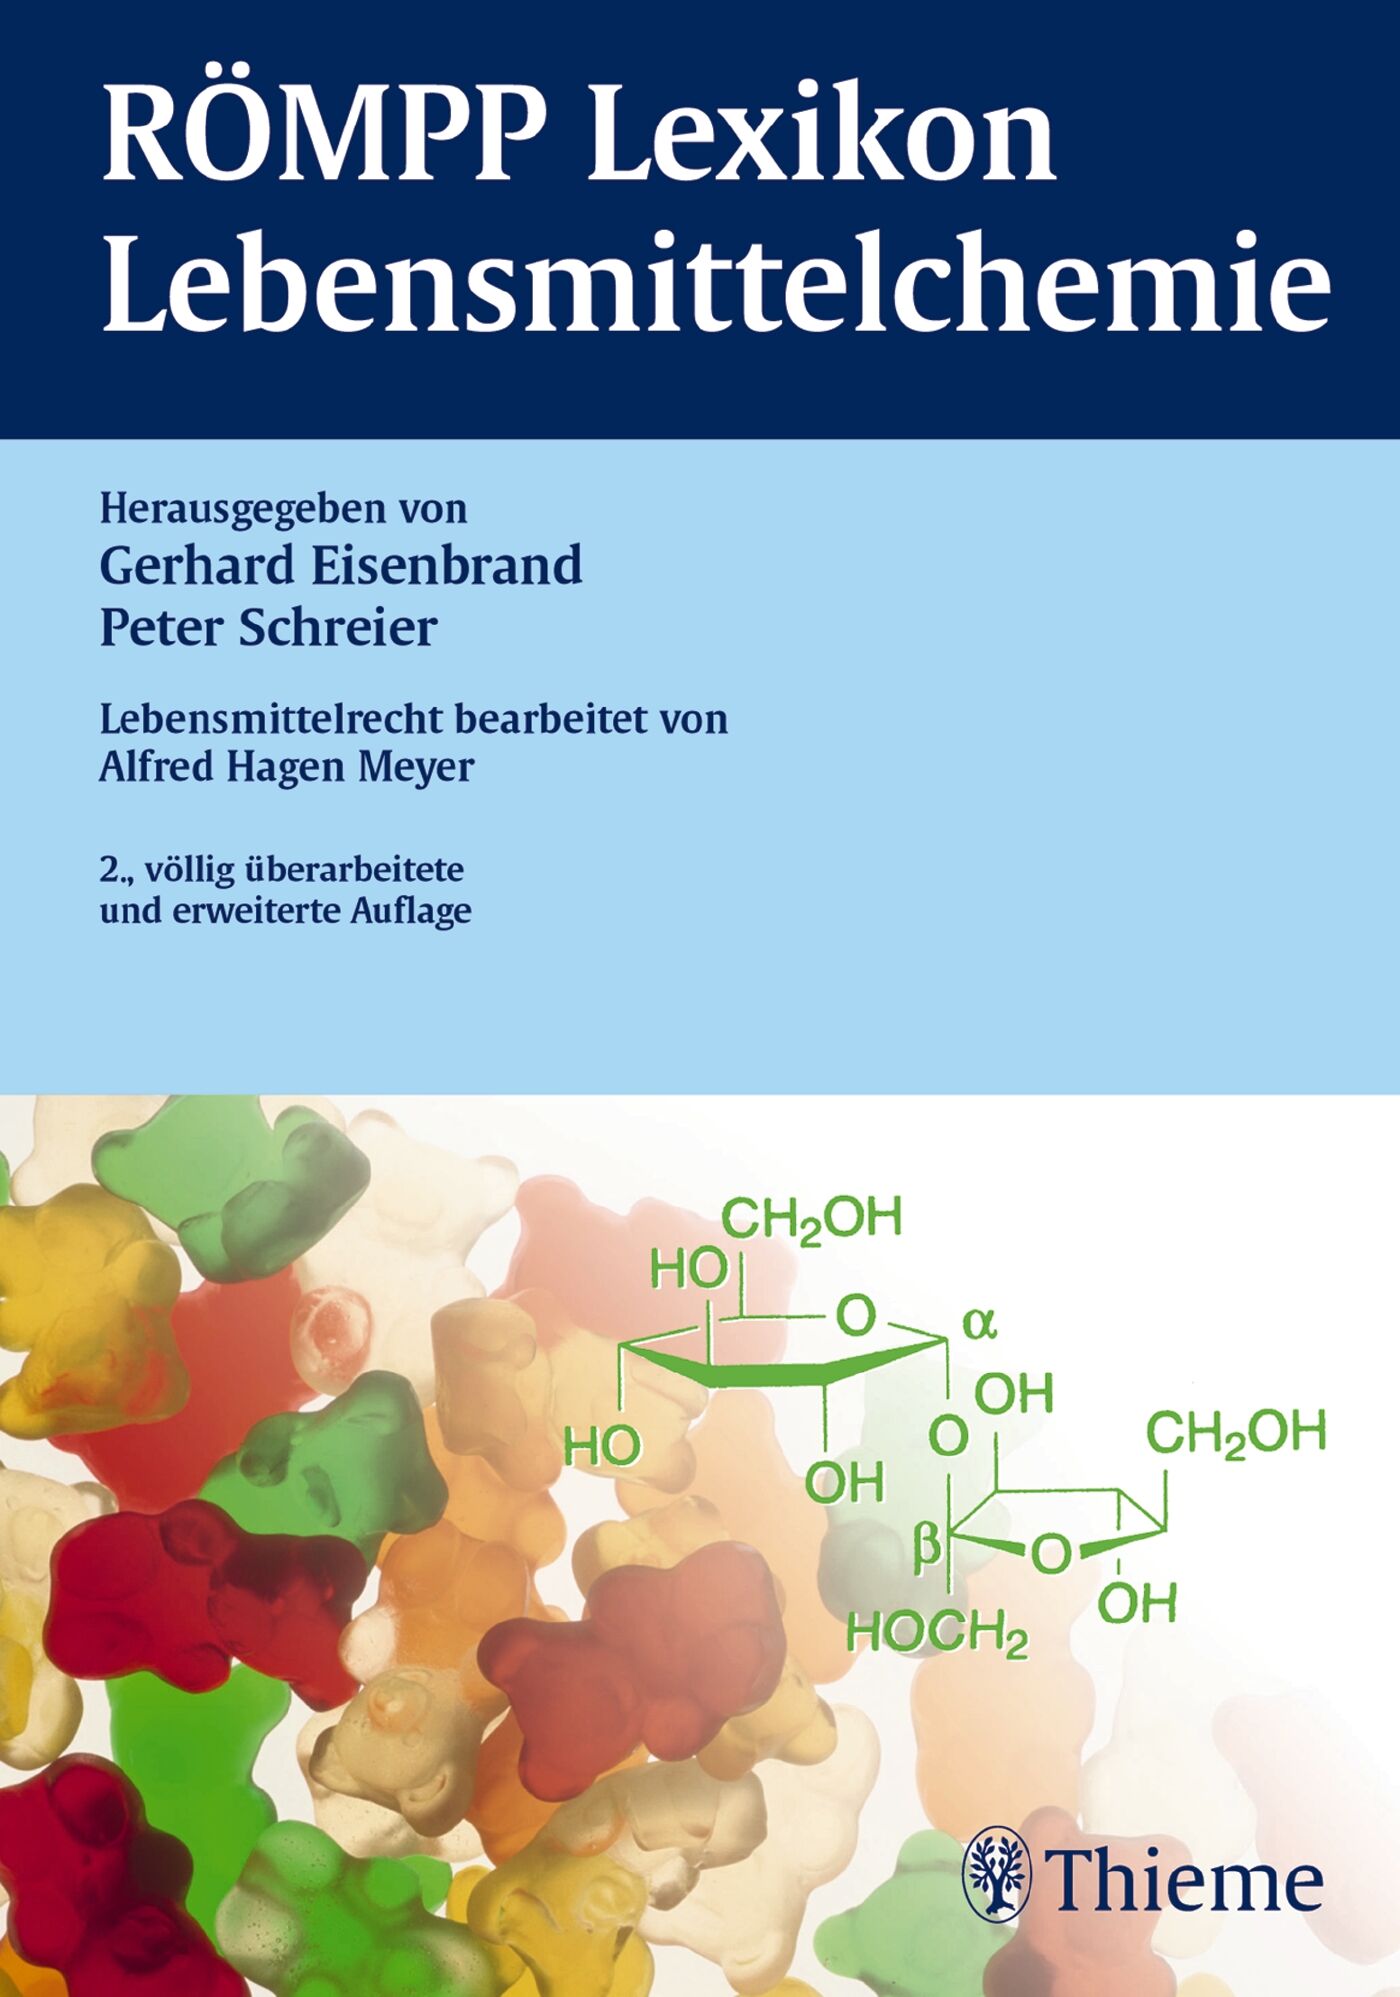 RÖMPP Lexikon Lebensmittelchemie, 2. Auflage, 2006, 9783131795328